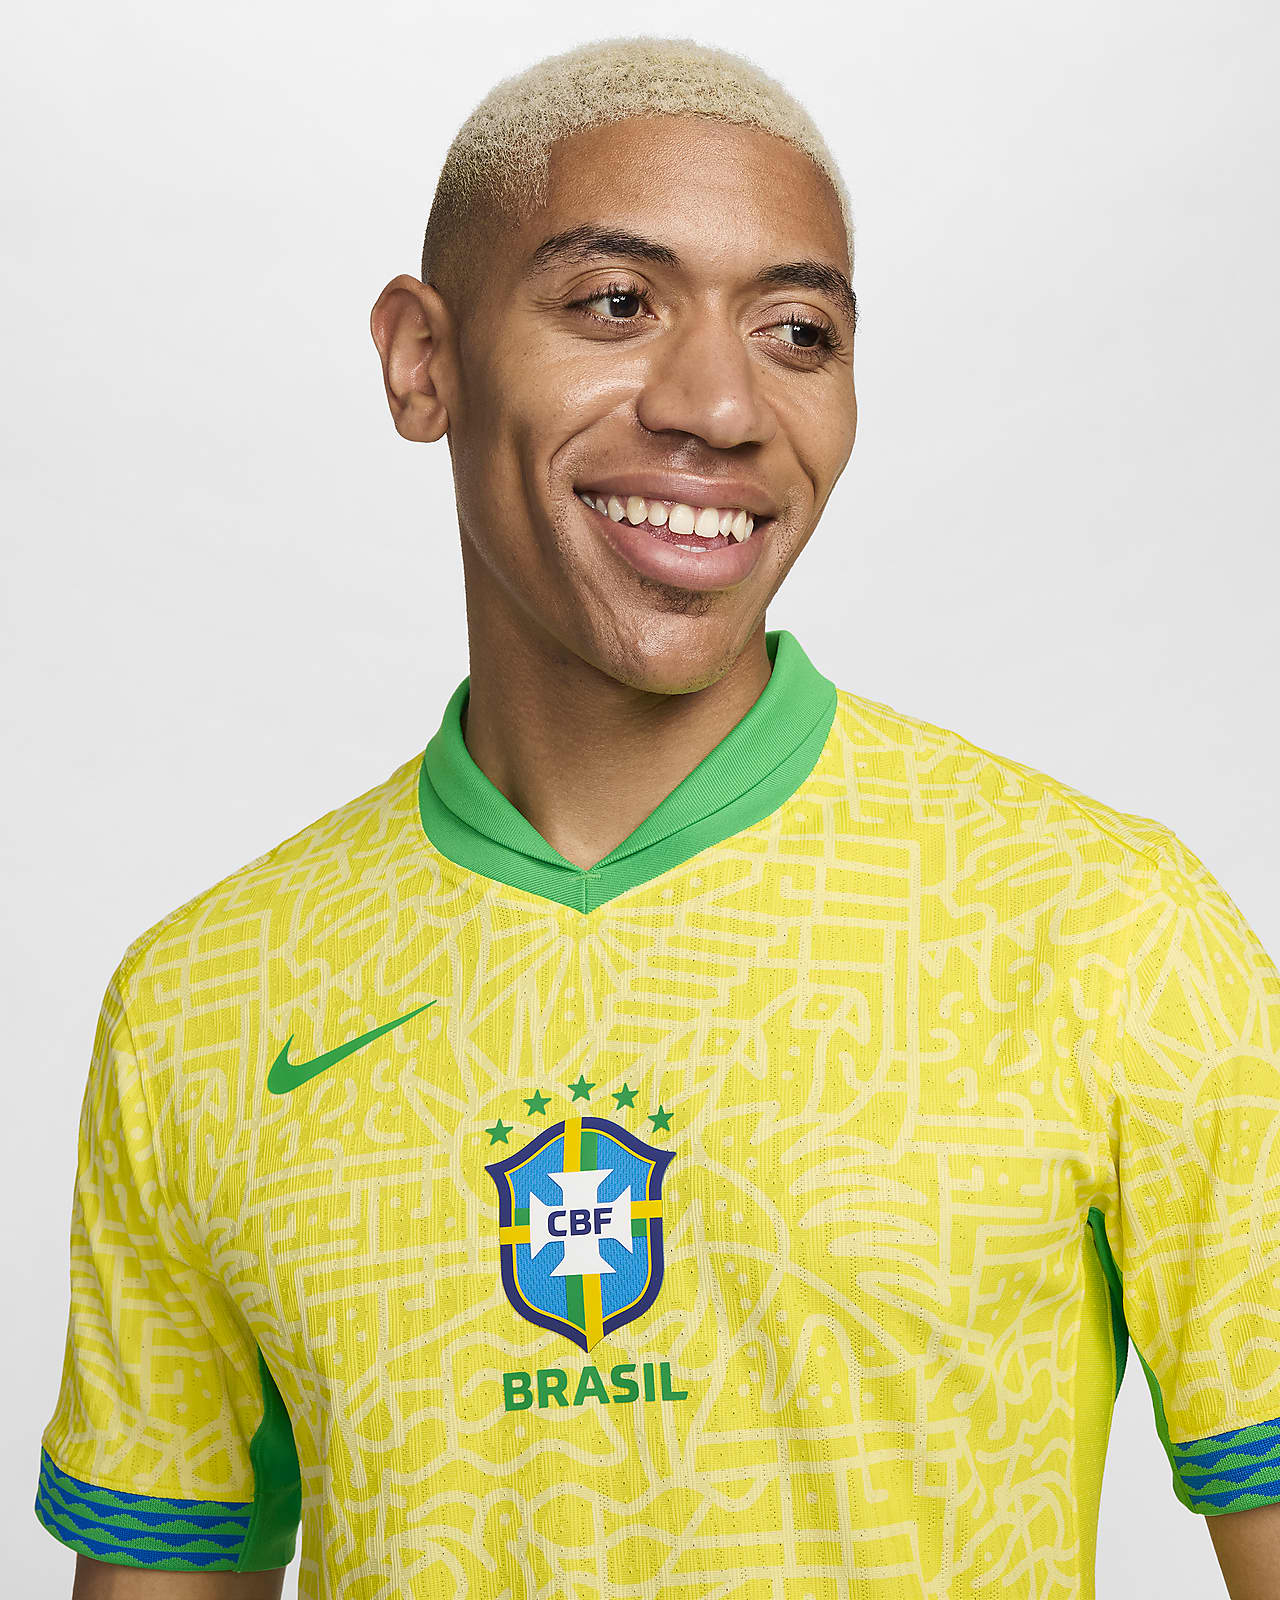 Men's Nike Dri-Fit Brasil Futebol Brazil Soccer Warmup Kit Shirt